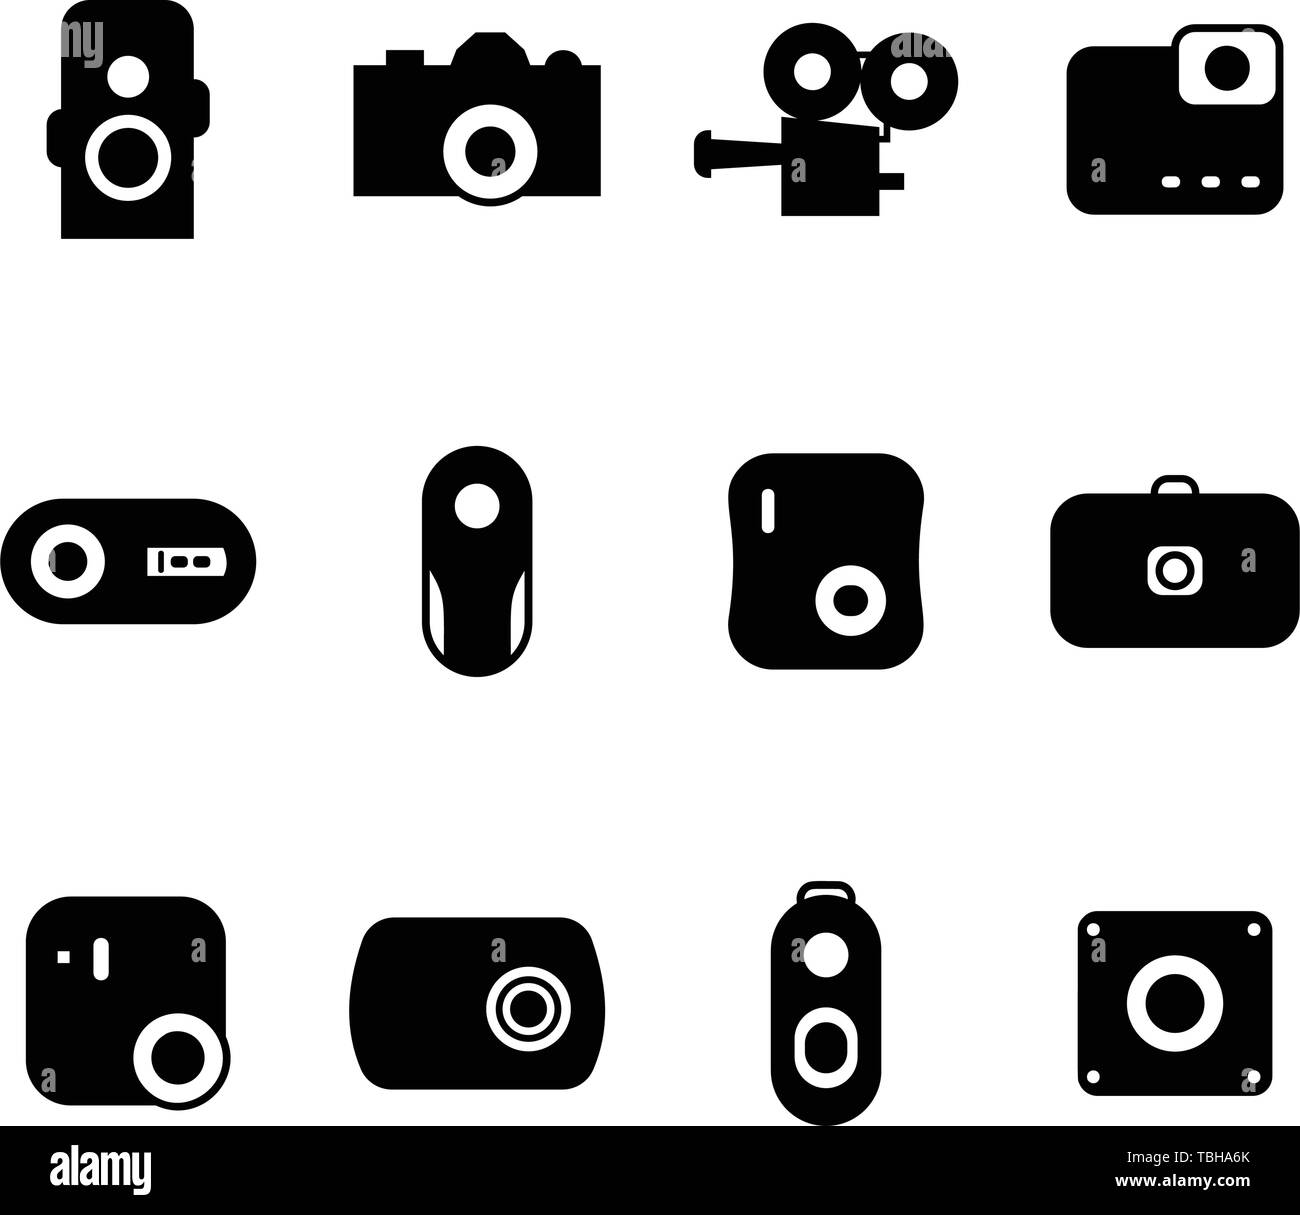 Iconos de camara fotografías e imágenes de alta resolución - Alamy